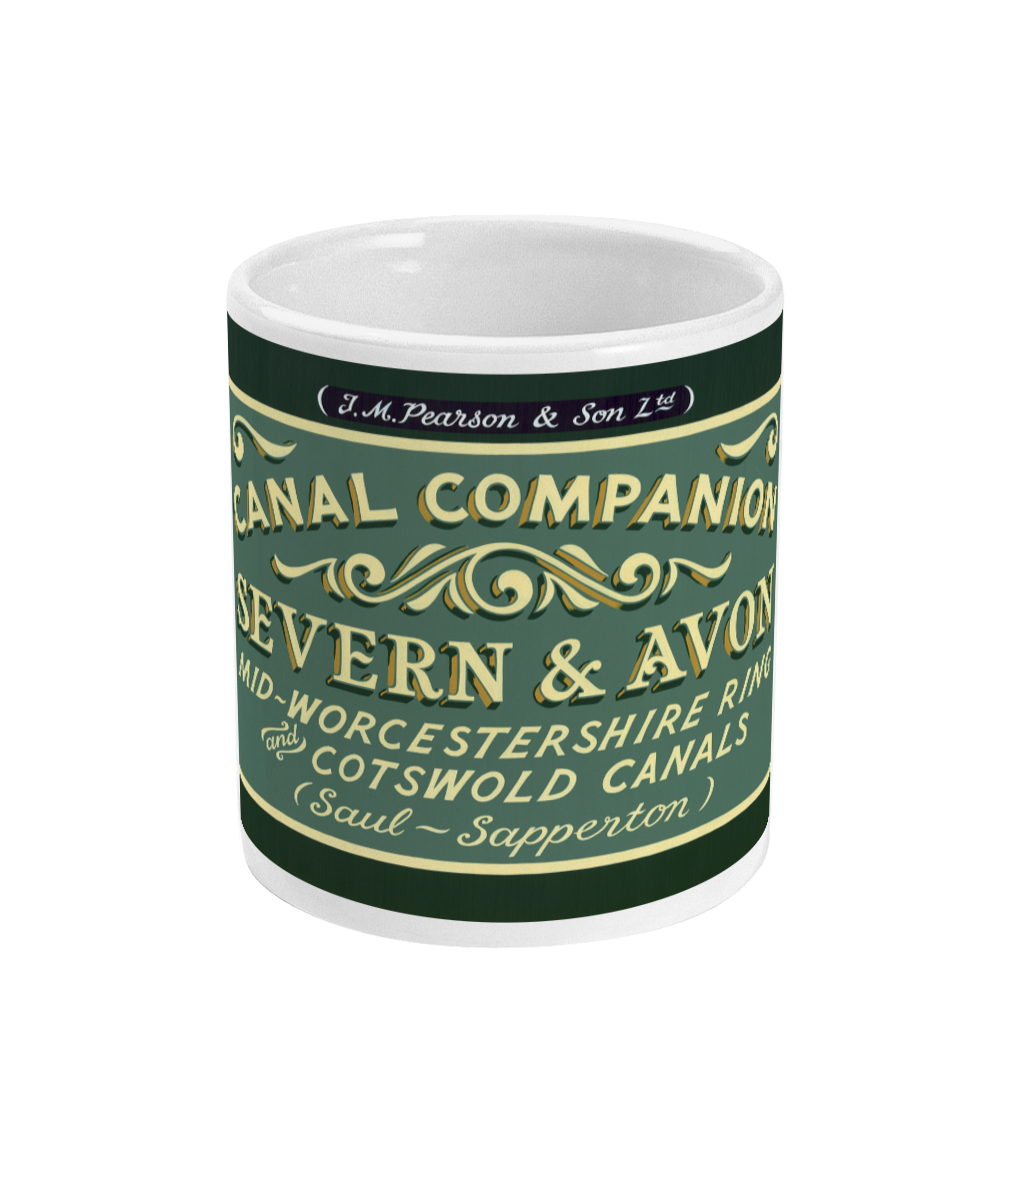 Pearson Canal Companion Ceramic Mug - Severn & Avon